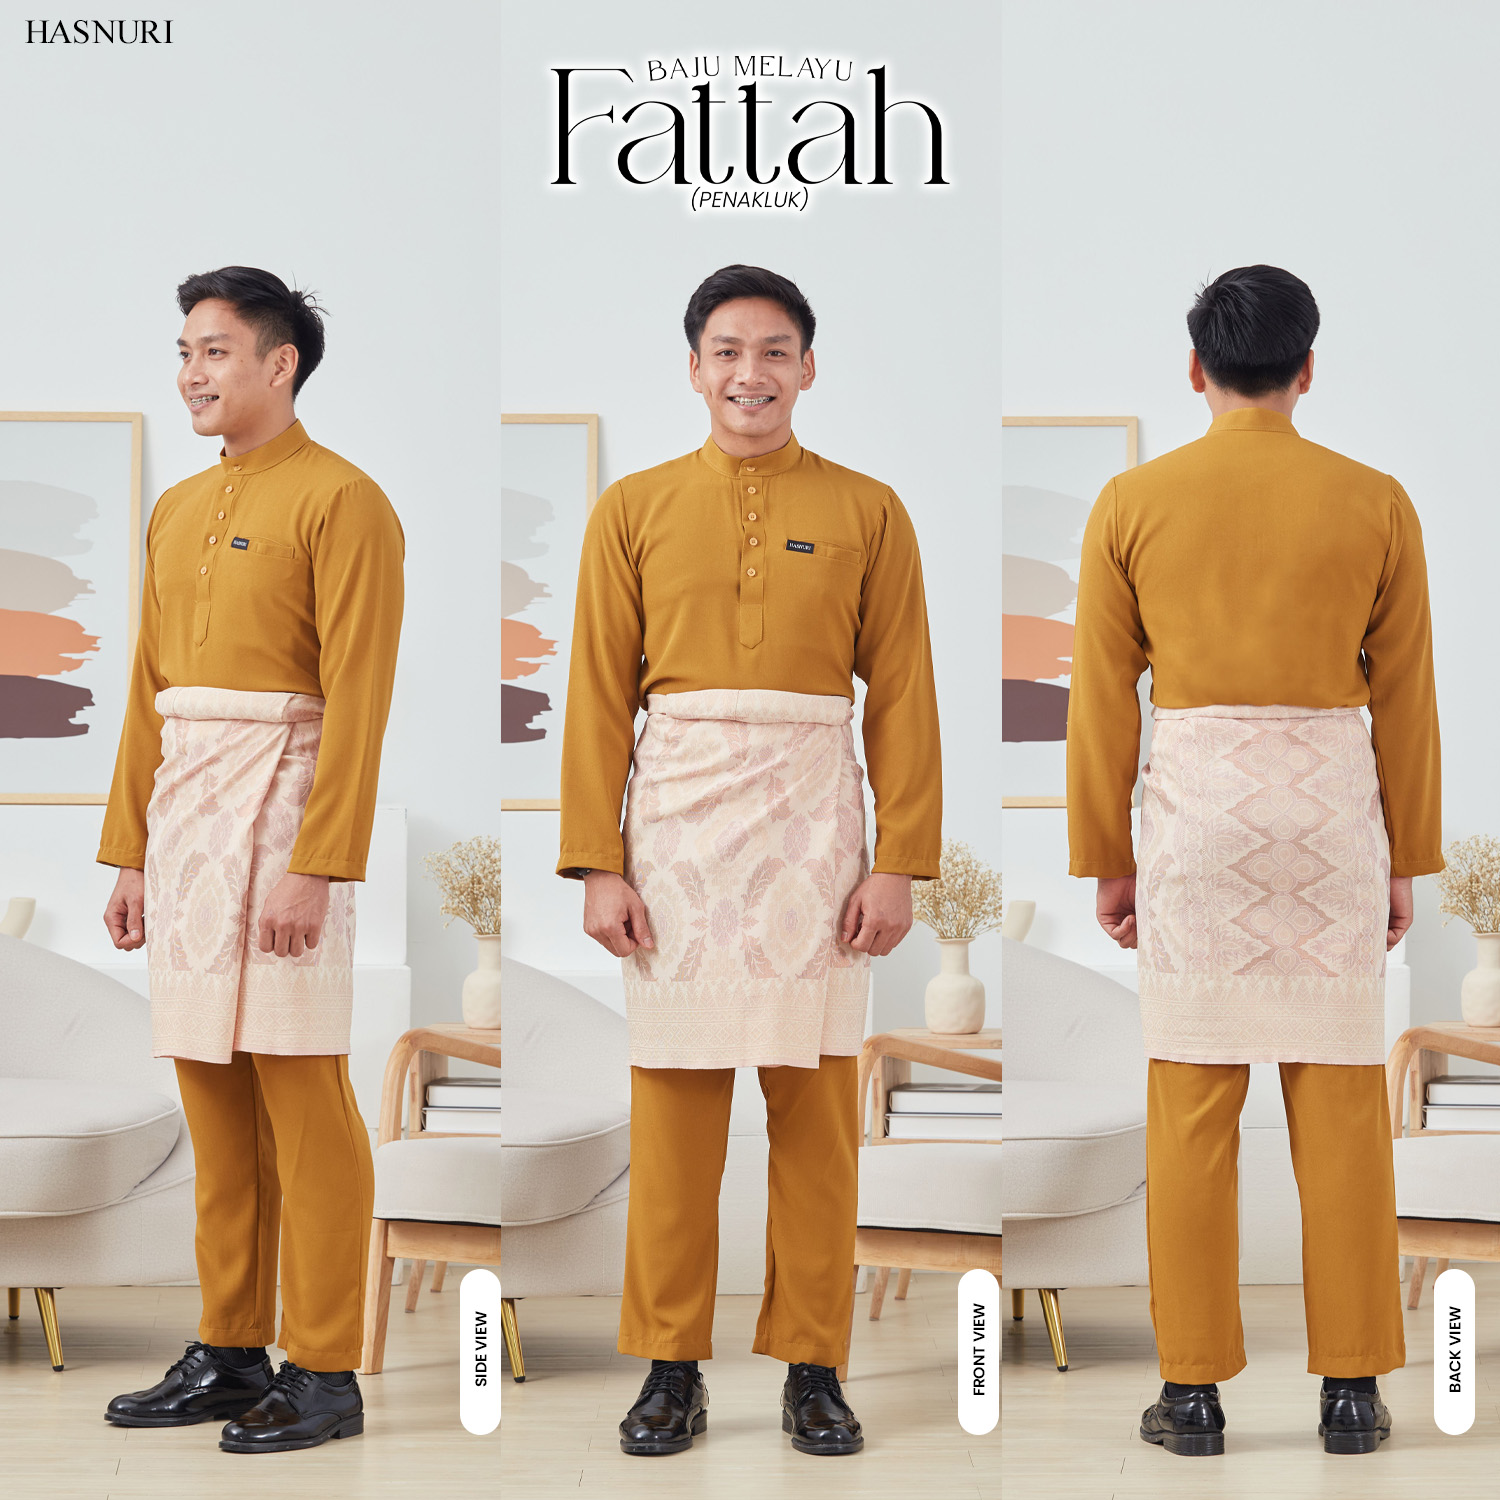 Baju Melayu Fattah - Vanilla